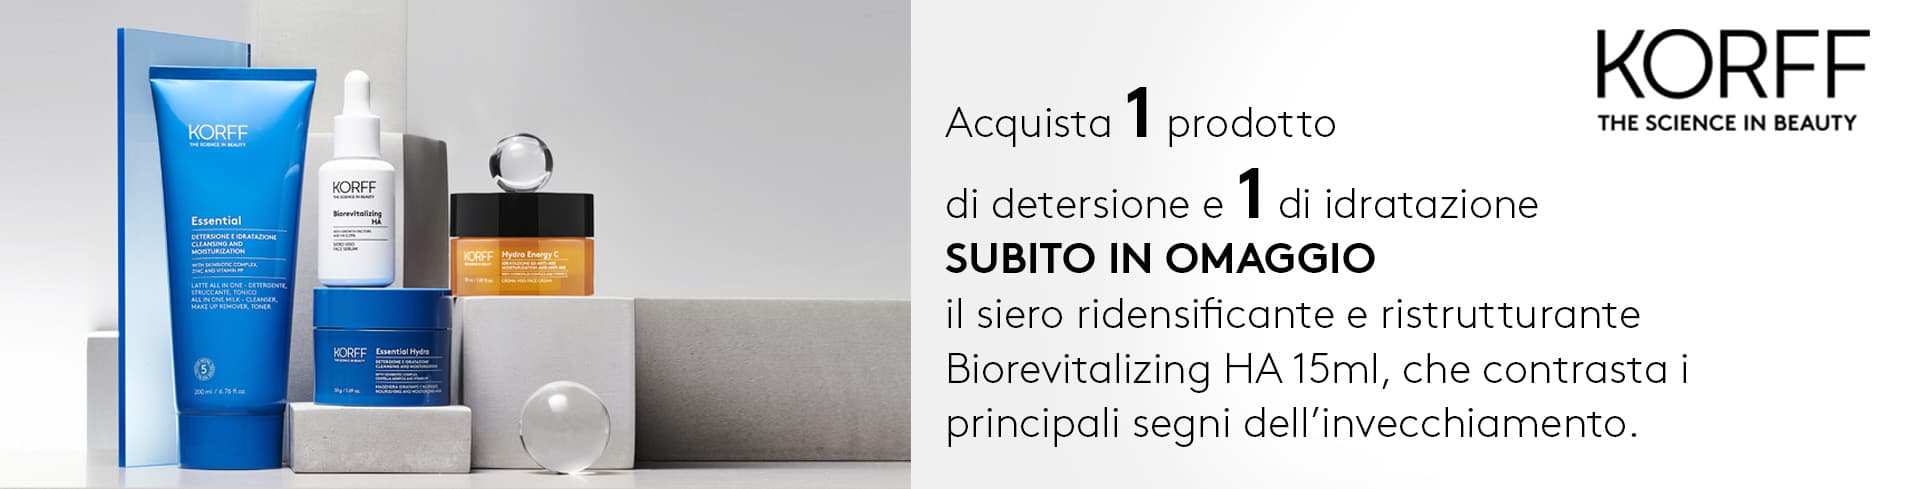 banner promozionale korff siero biorevitalizing ha 15ml  desktop